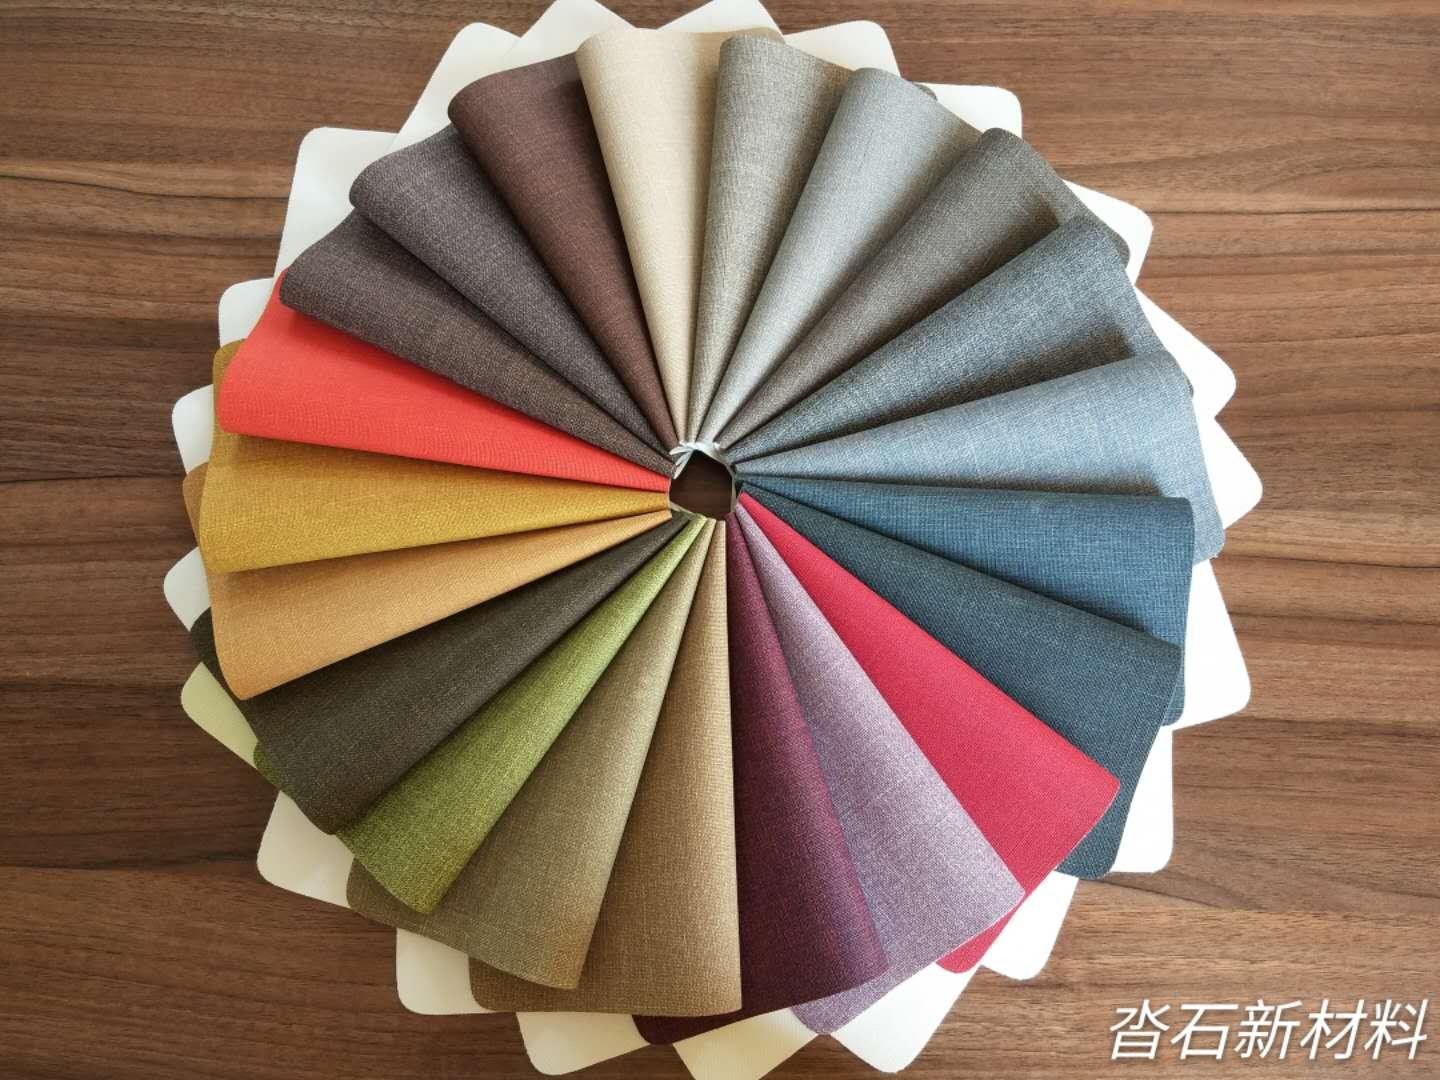 Imitation cloth grain artificial leather 3